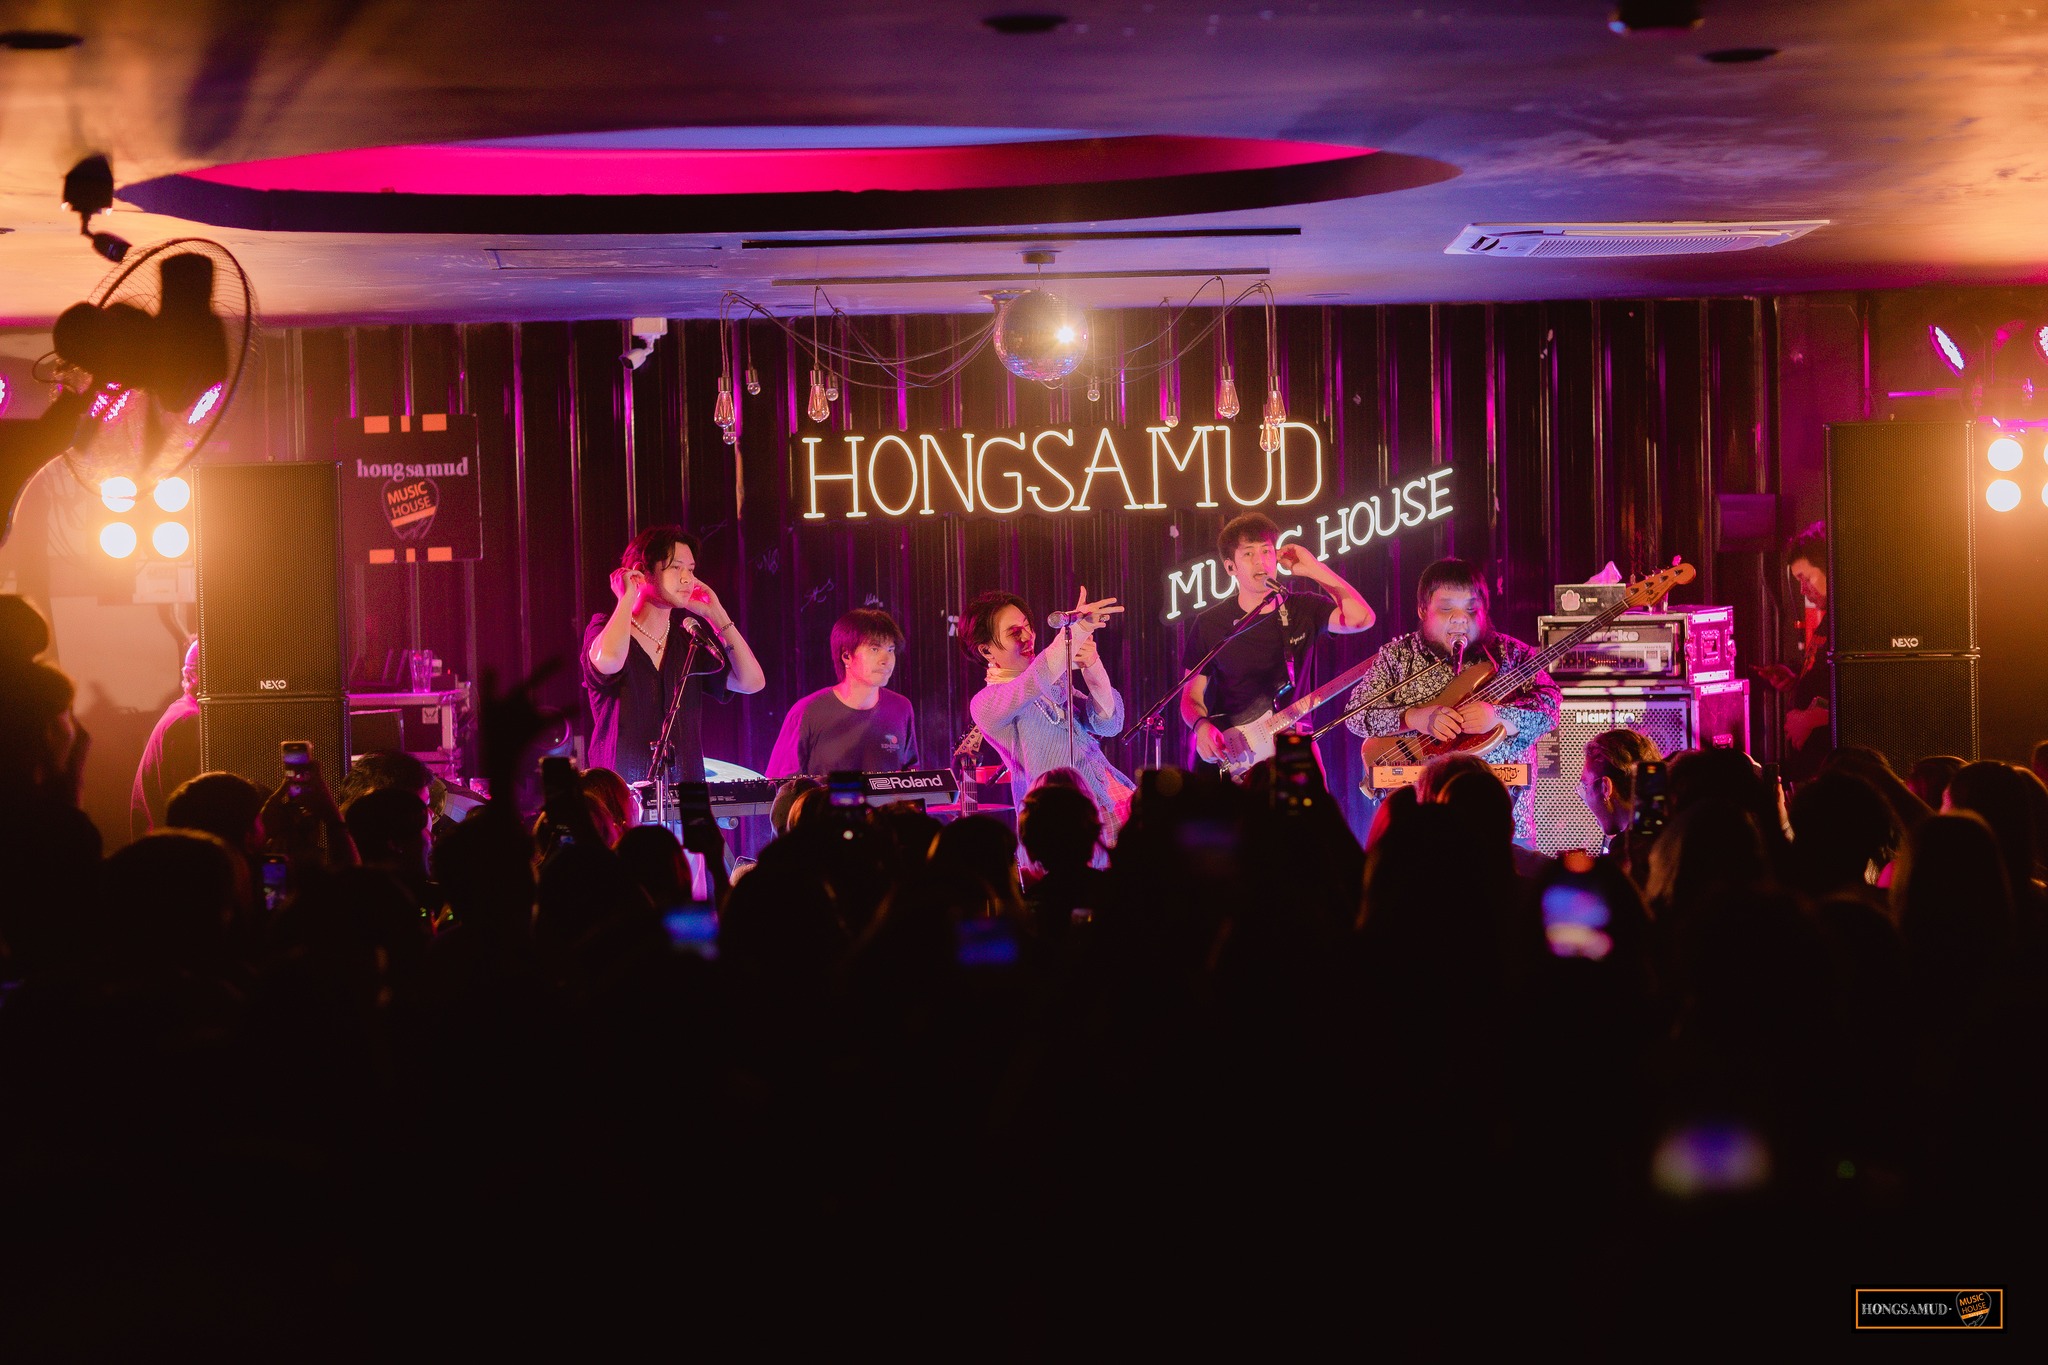 HongsamudMusichouse Music house (ห้องสมุด Music house) : Songkhla (สงขลา)